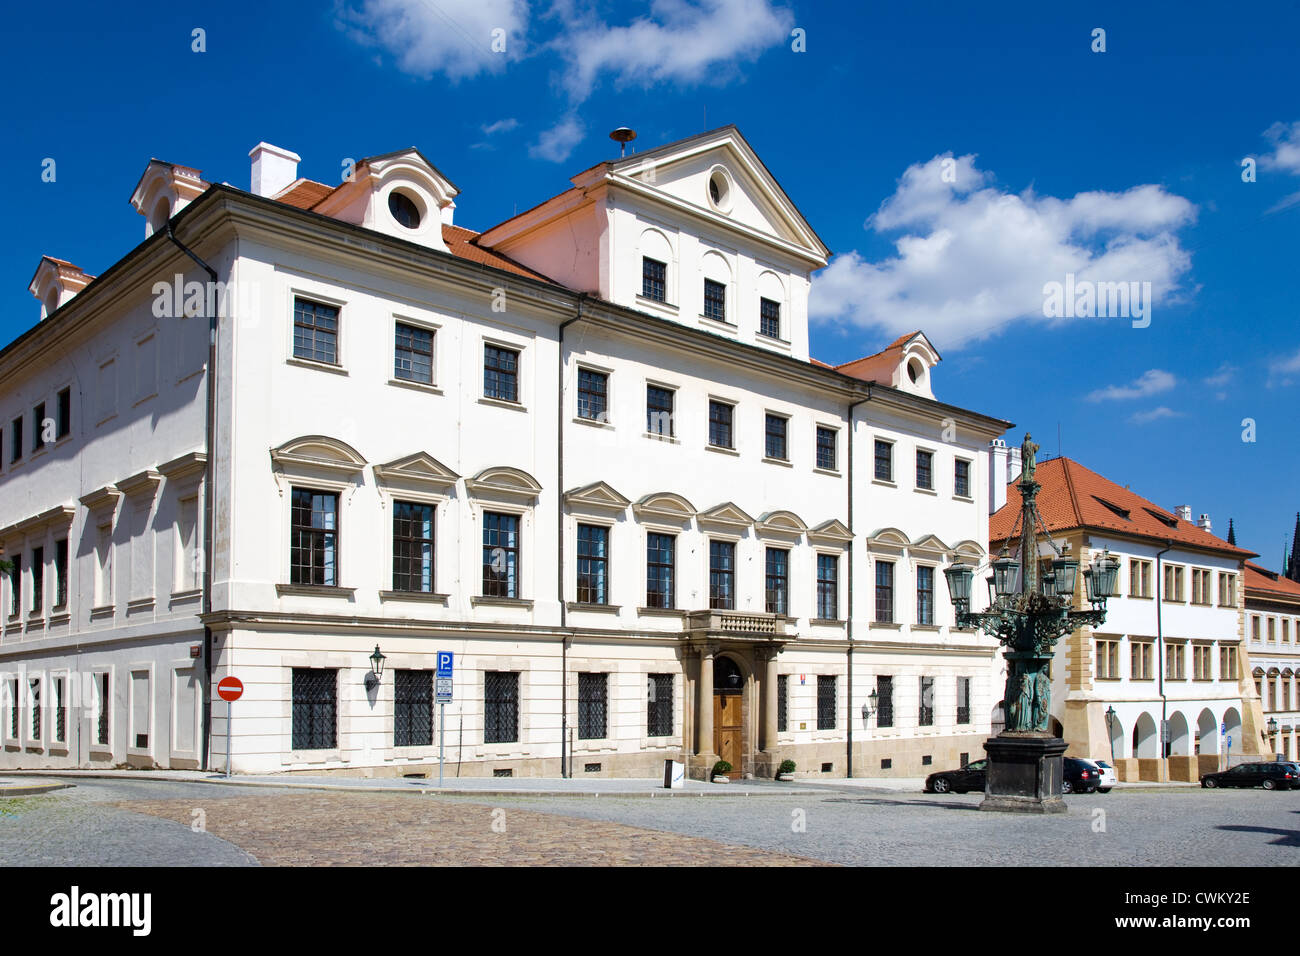 Ministerstvo obrany - hradni straz, Loretanska, Hradcany (UNESCO), Praha, Ceska republika Foto Stock